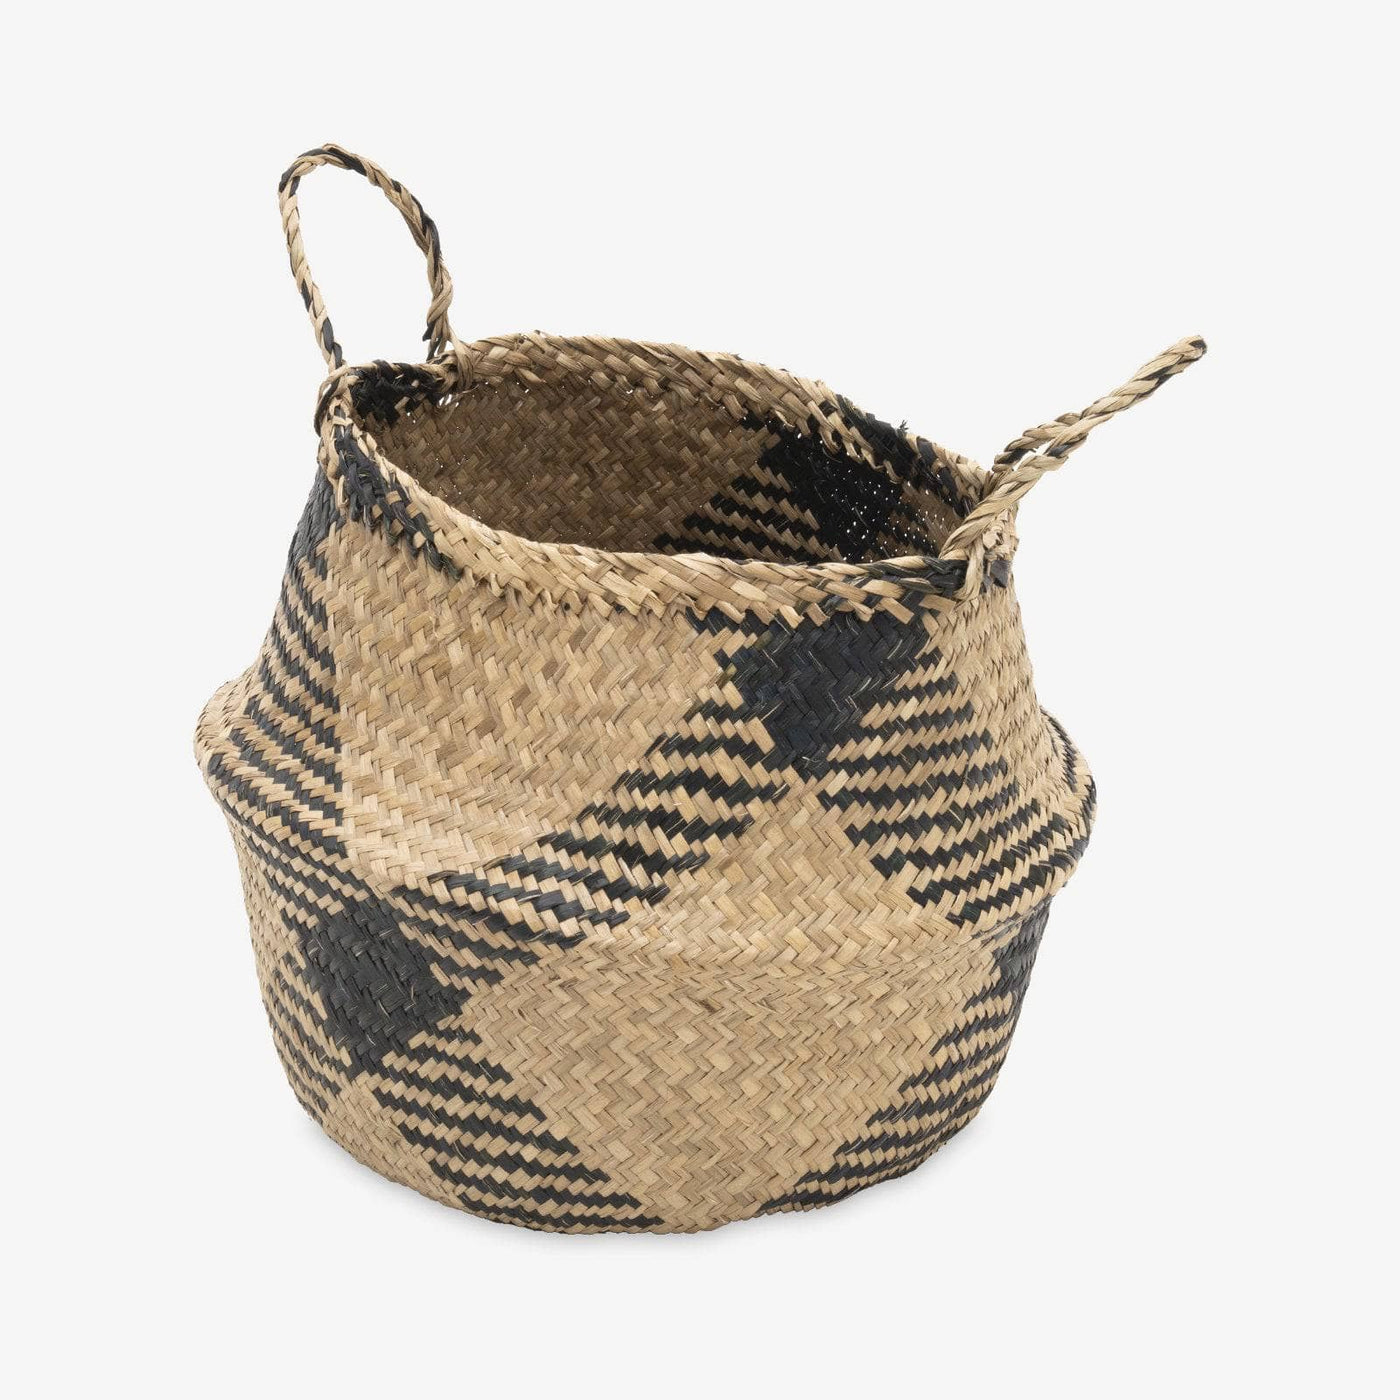 Jane Diamond Weave Seagrass Belly Basket, Natural, L Baskets sazy.com